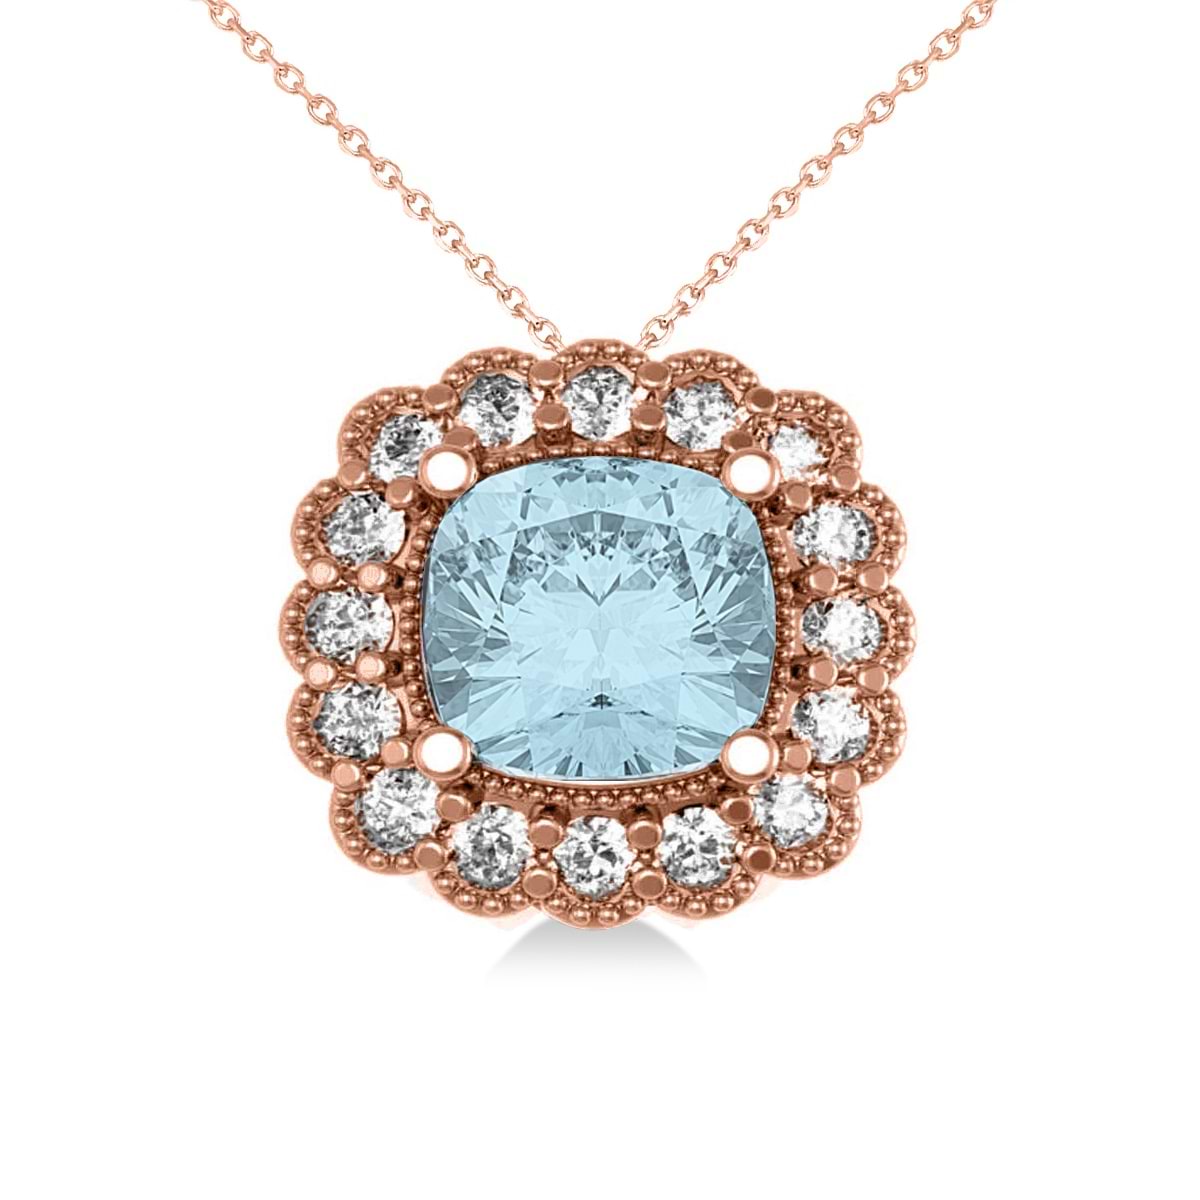 Aquamarine & Diamond Floral Cushion Pendant Necklace 14k Rose Gold (2.41ct)